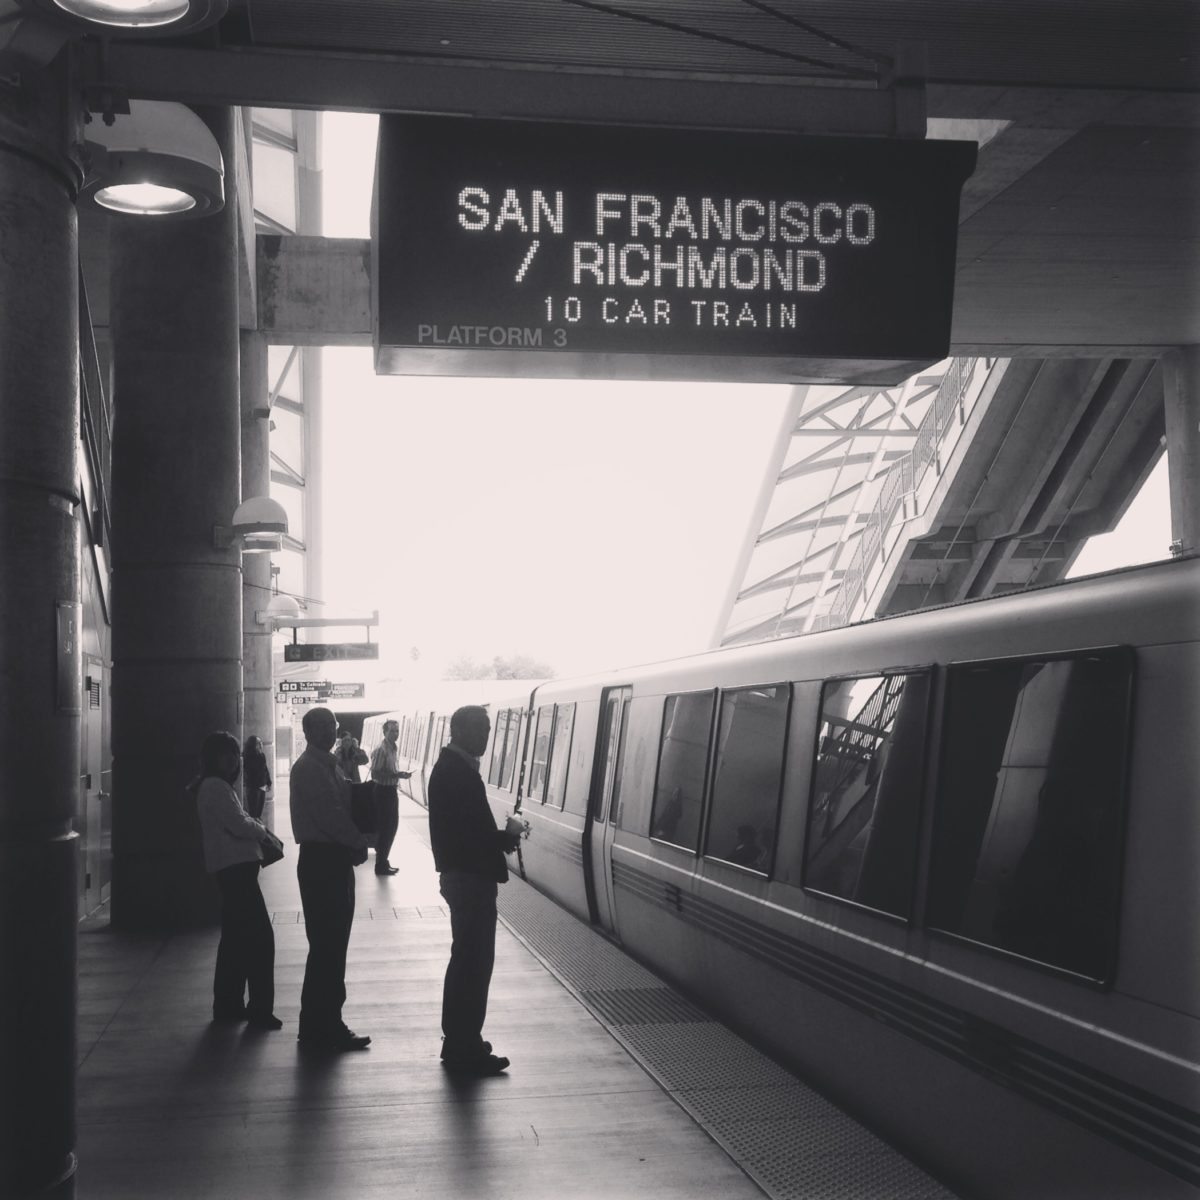 Riding BART to San Francisco.